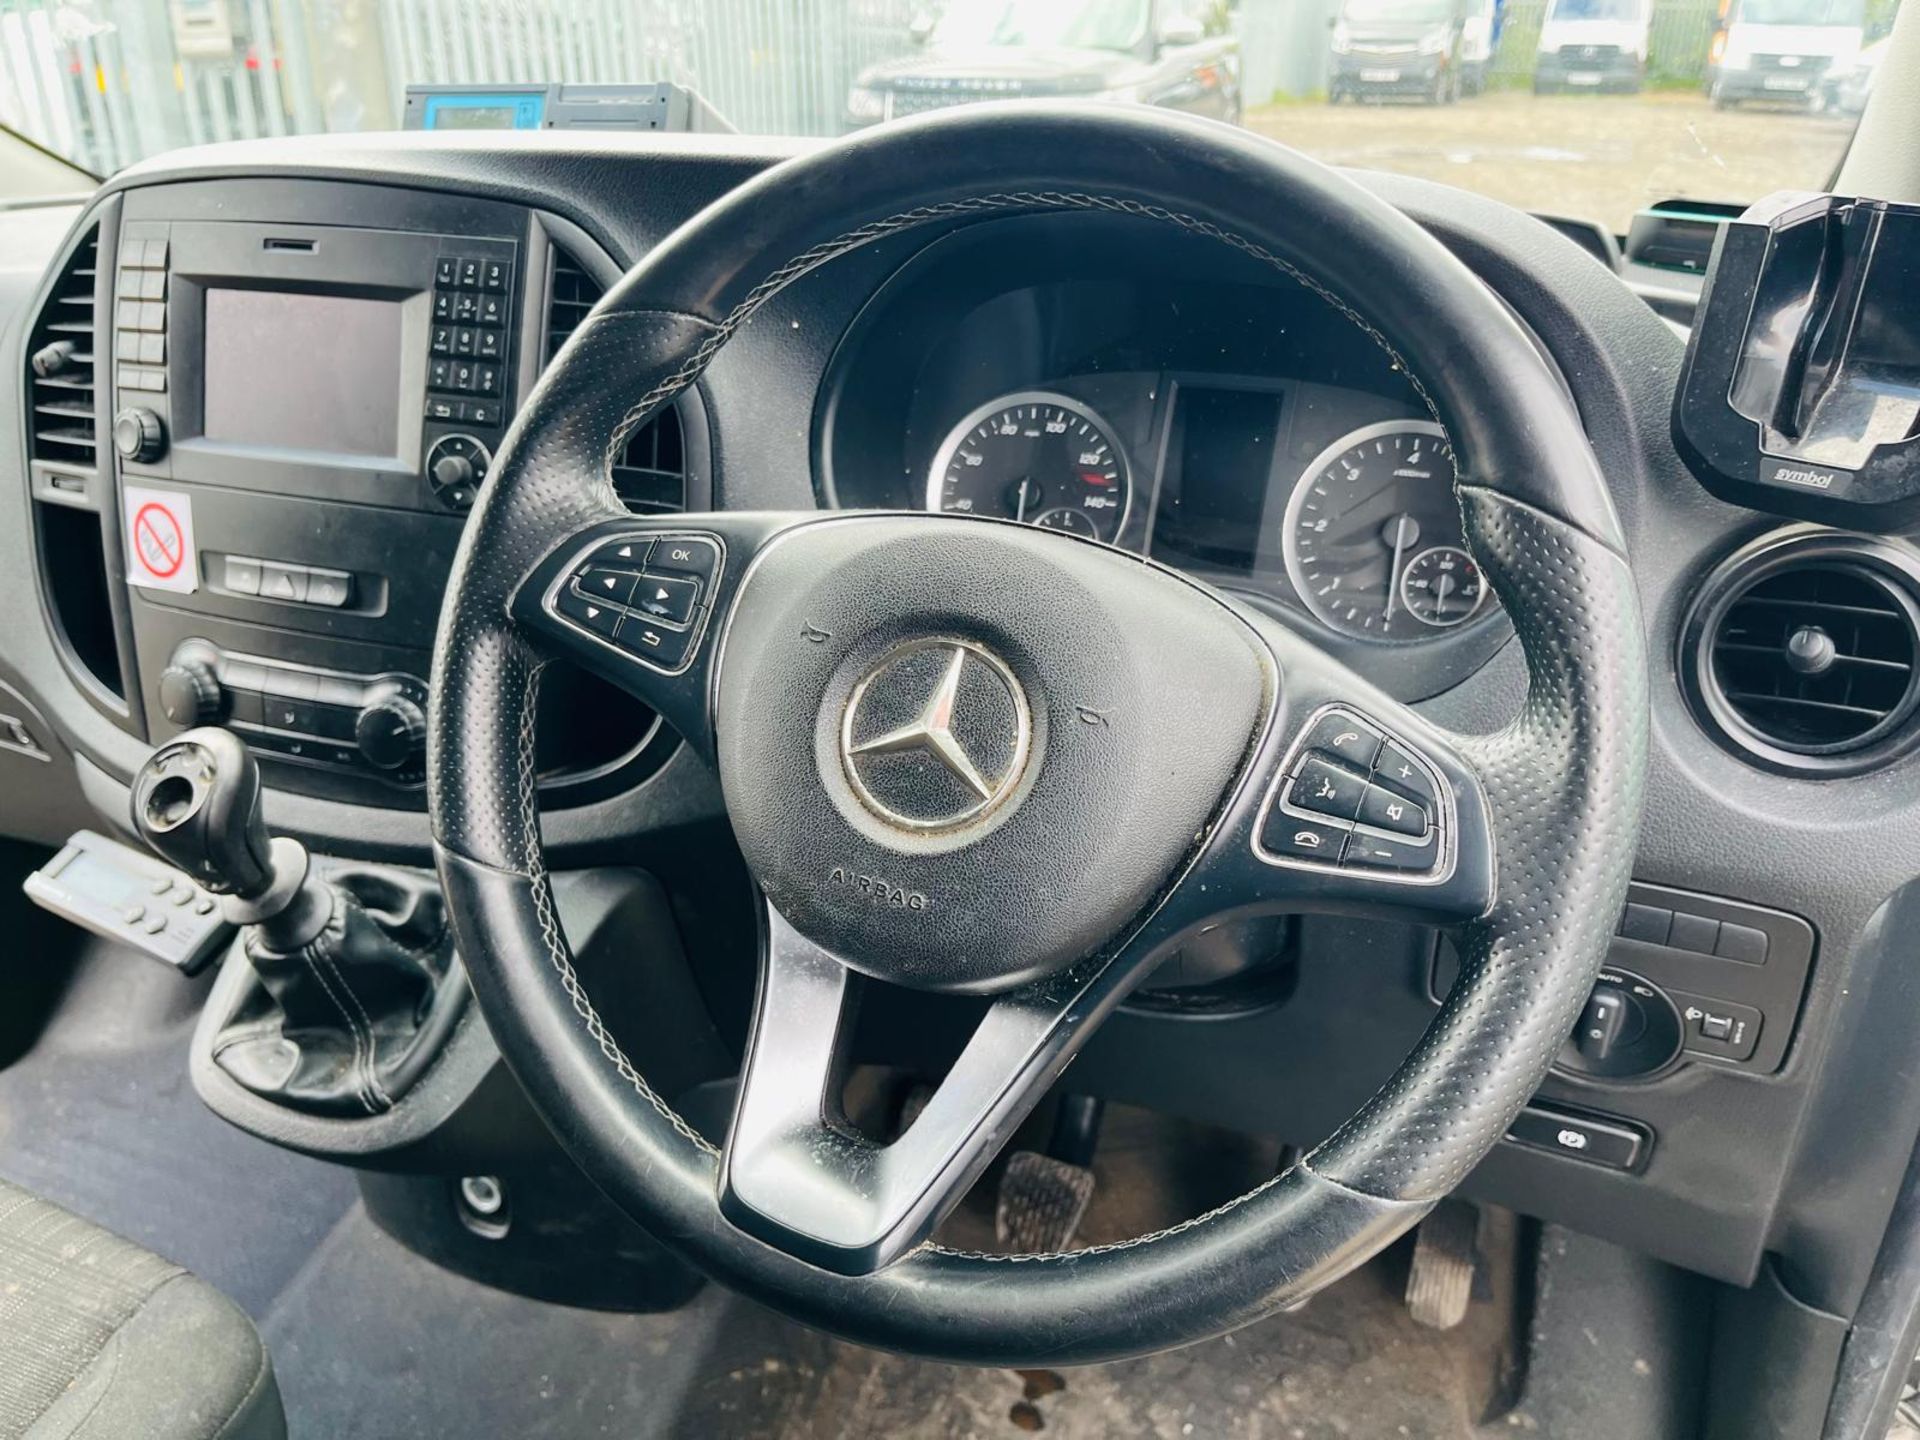 Mercedes Benz Vito 114 CDI RWD Fridge/Freezer 2.1 2019 '19 Reg '-ULEZ Compliant-Parking Sensors-A/C - Image 19 of 27